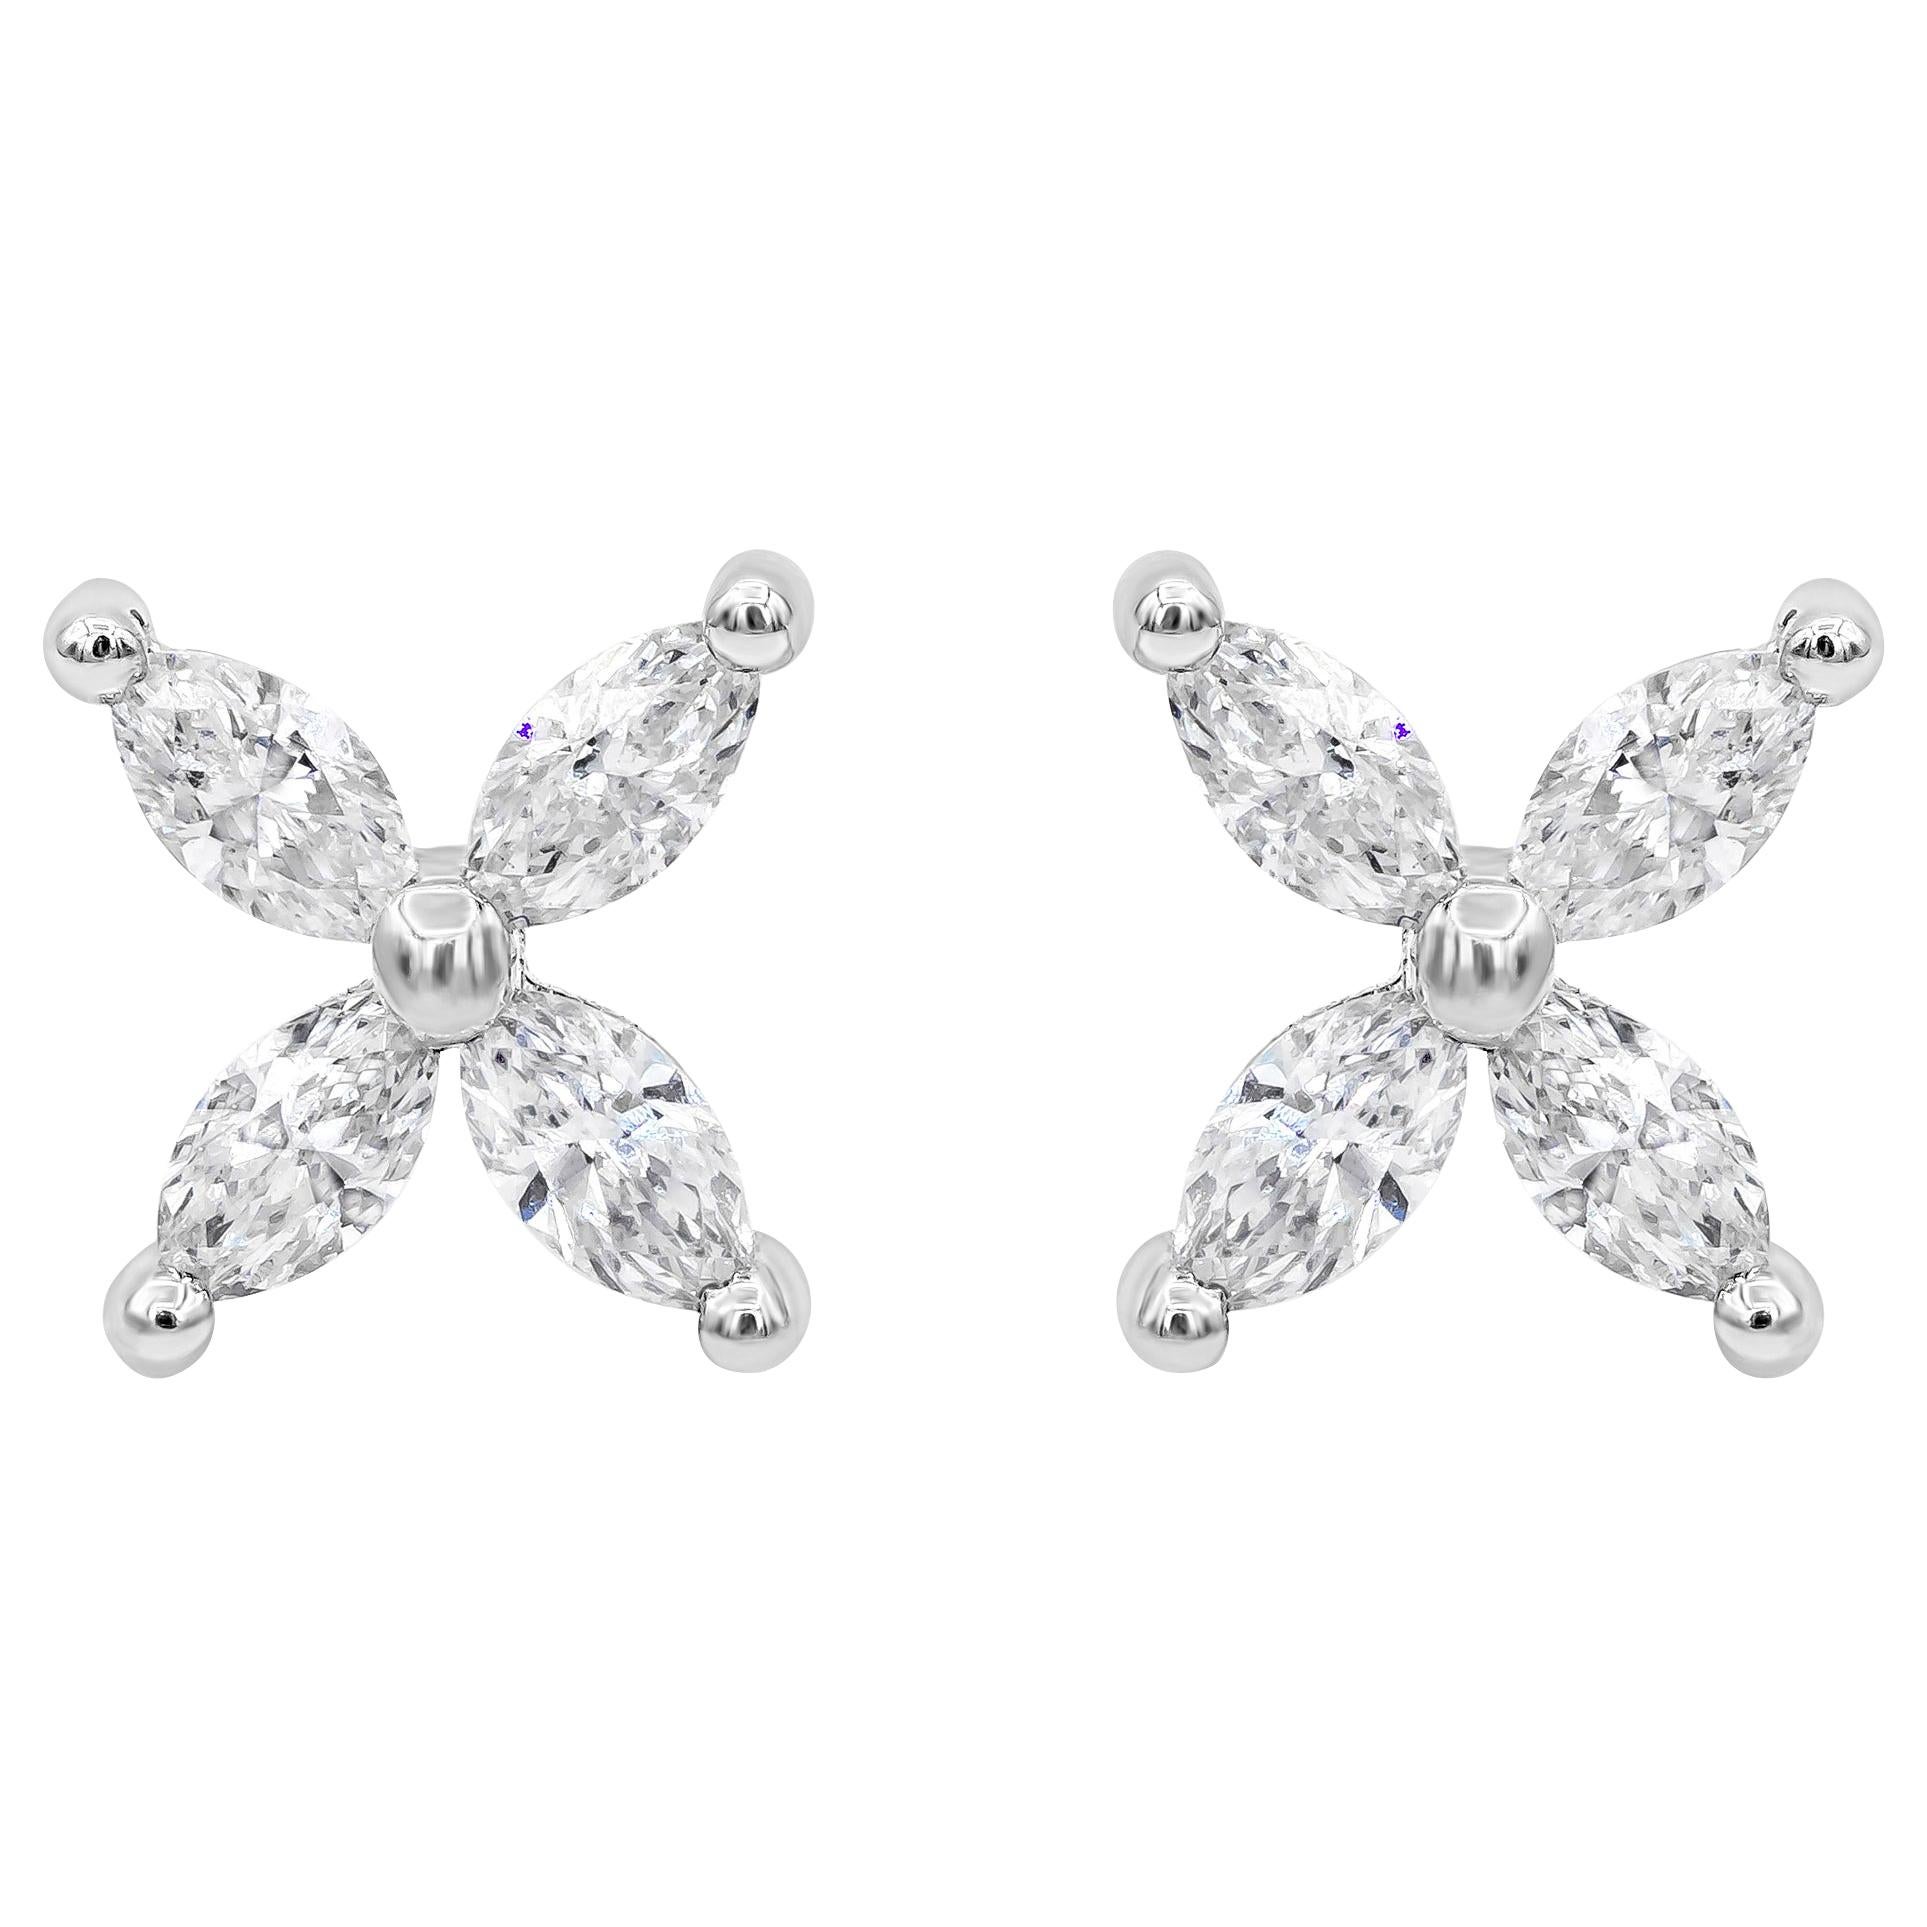 Roman Malakov 1.52 Carats Total Marquise Cut Diamond Stud Earrings